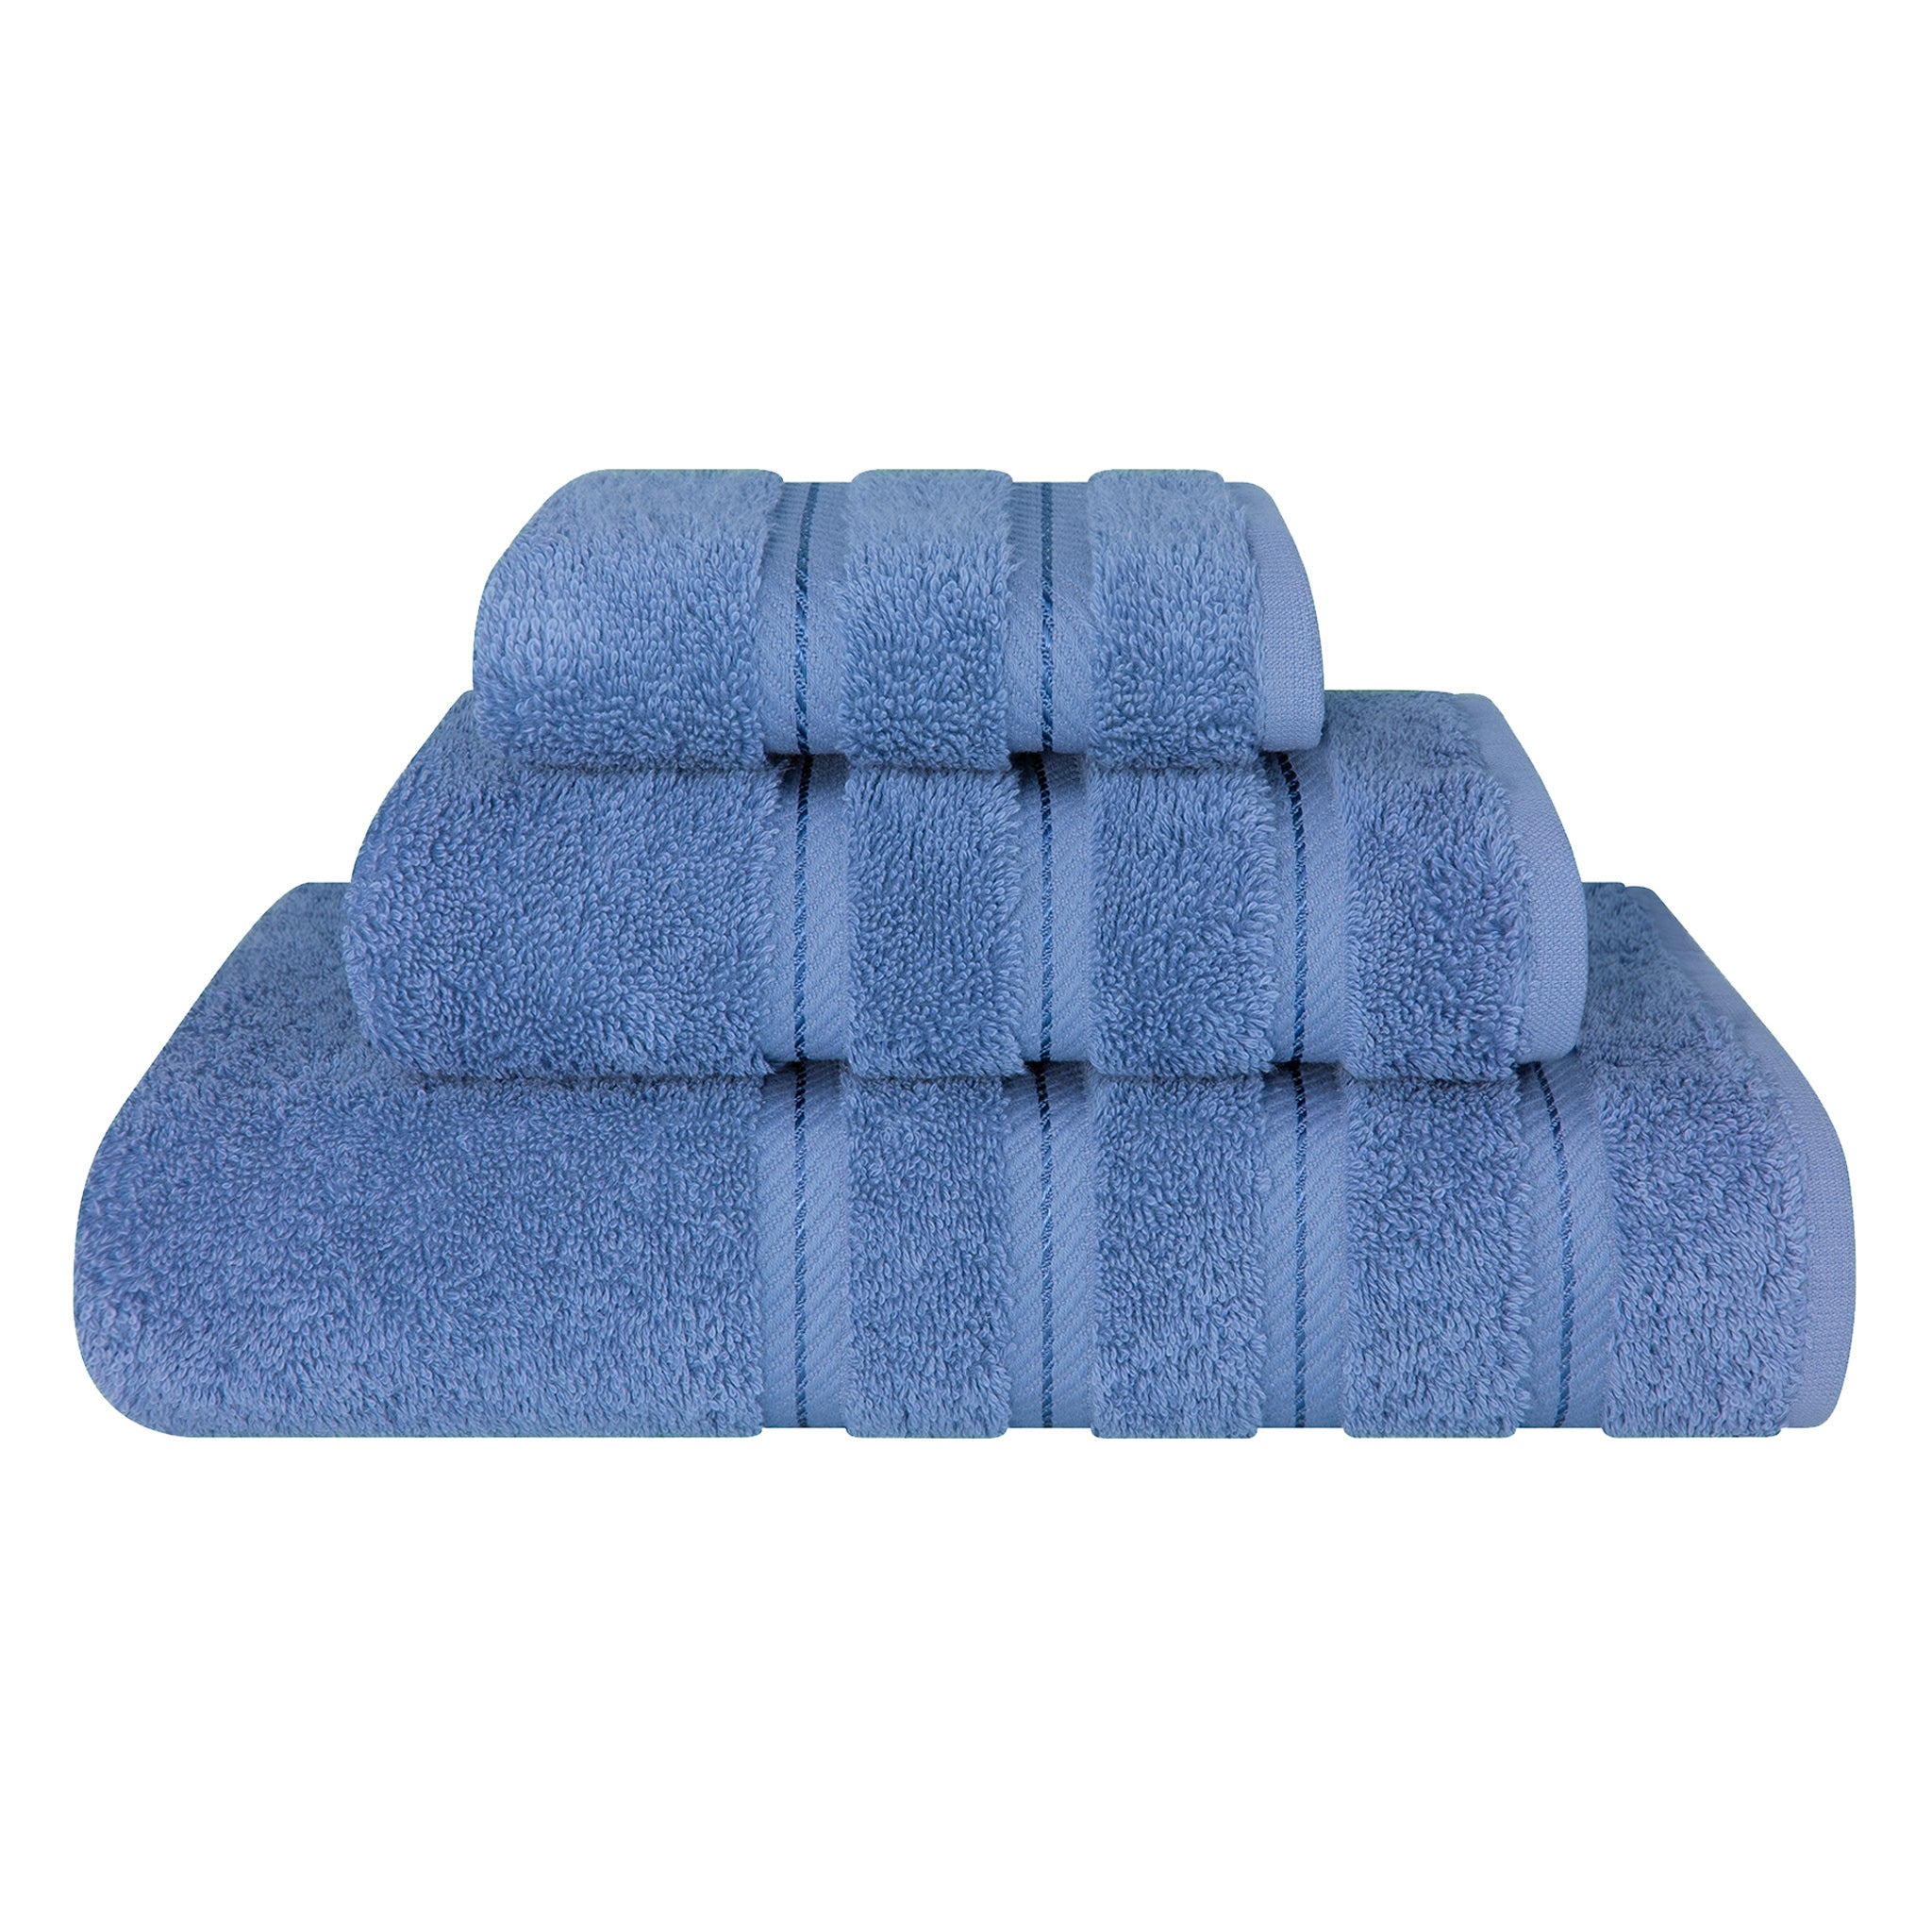 American Soft Linen 3 Piece Luxury Hotel Towel Set 20 set case pack electric-blue-1